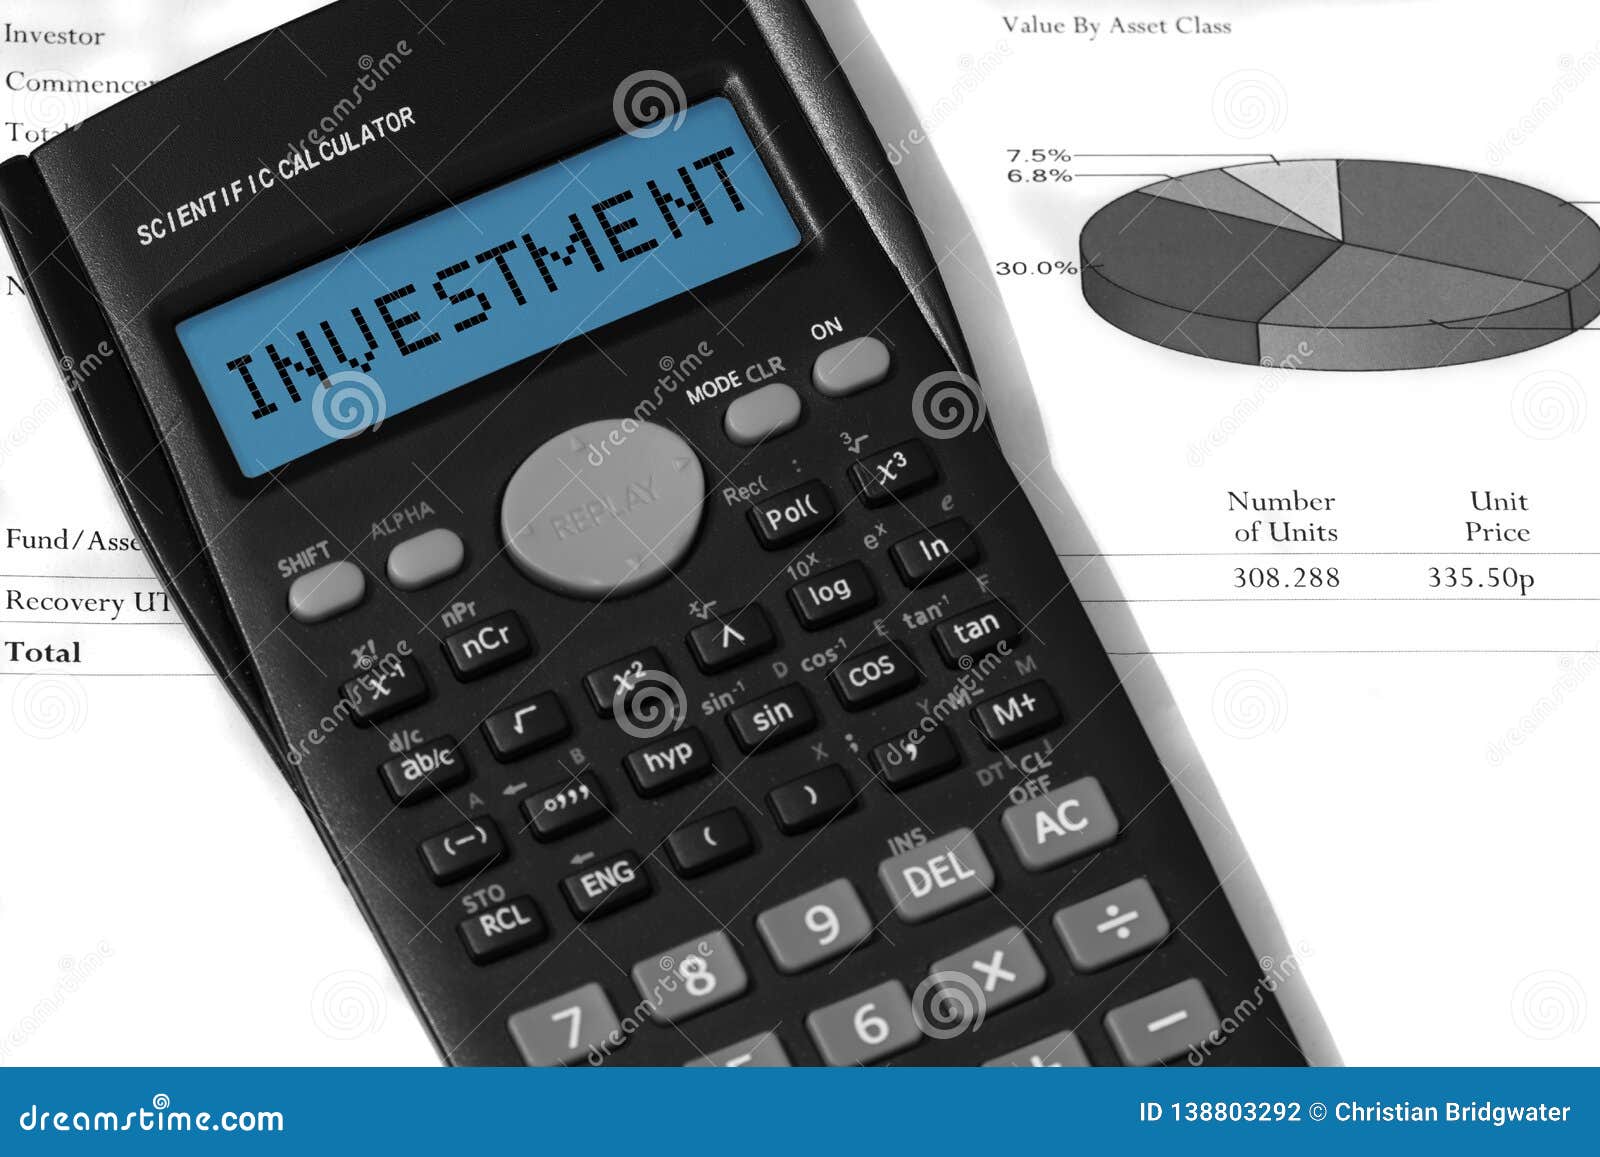 Building a Return On Investment Calculator Using Blazor - ComponentOne